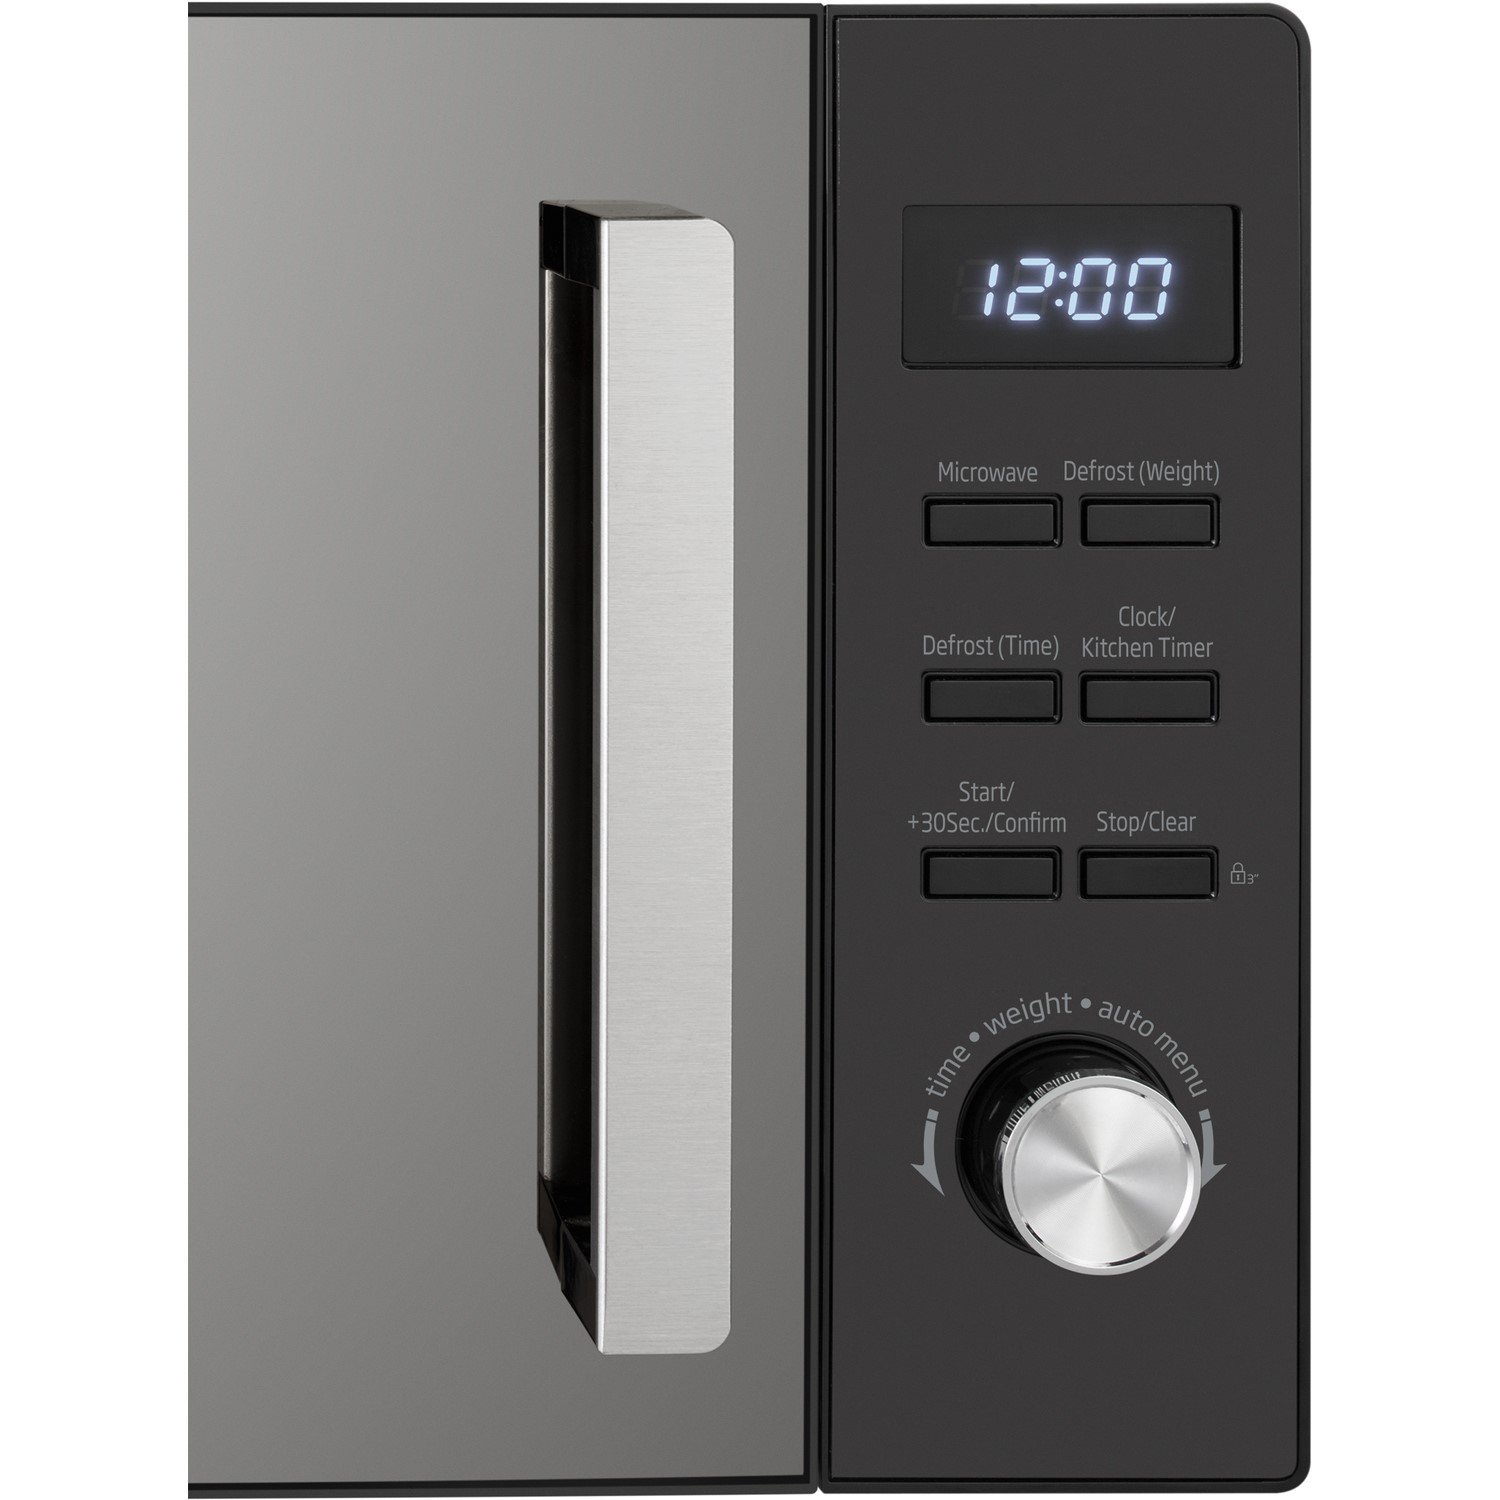 Beko MOF20110B 20L Microwave Oven - Black MOF20110B 8690842224157 | eBay